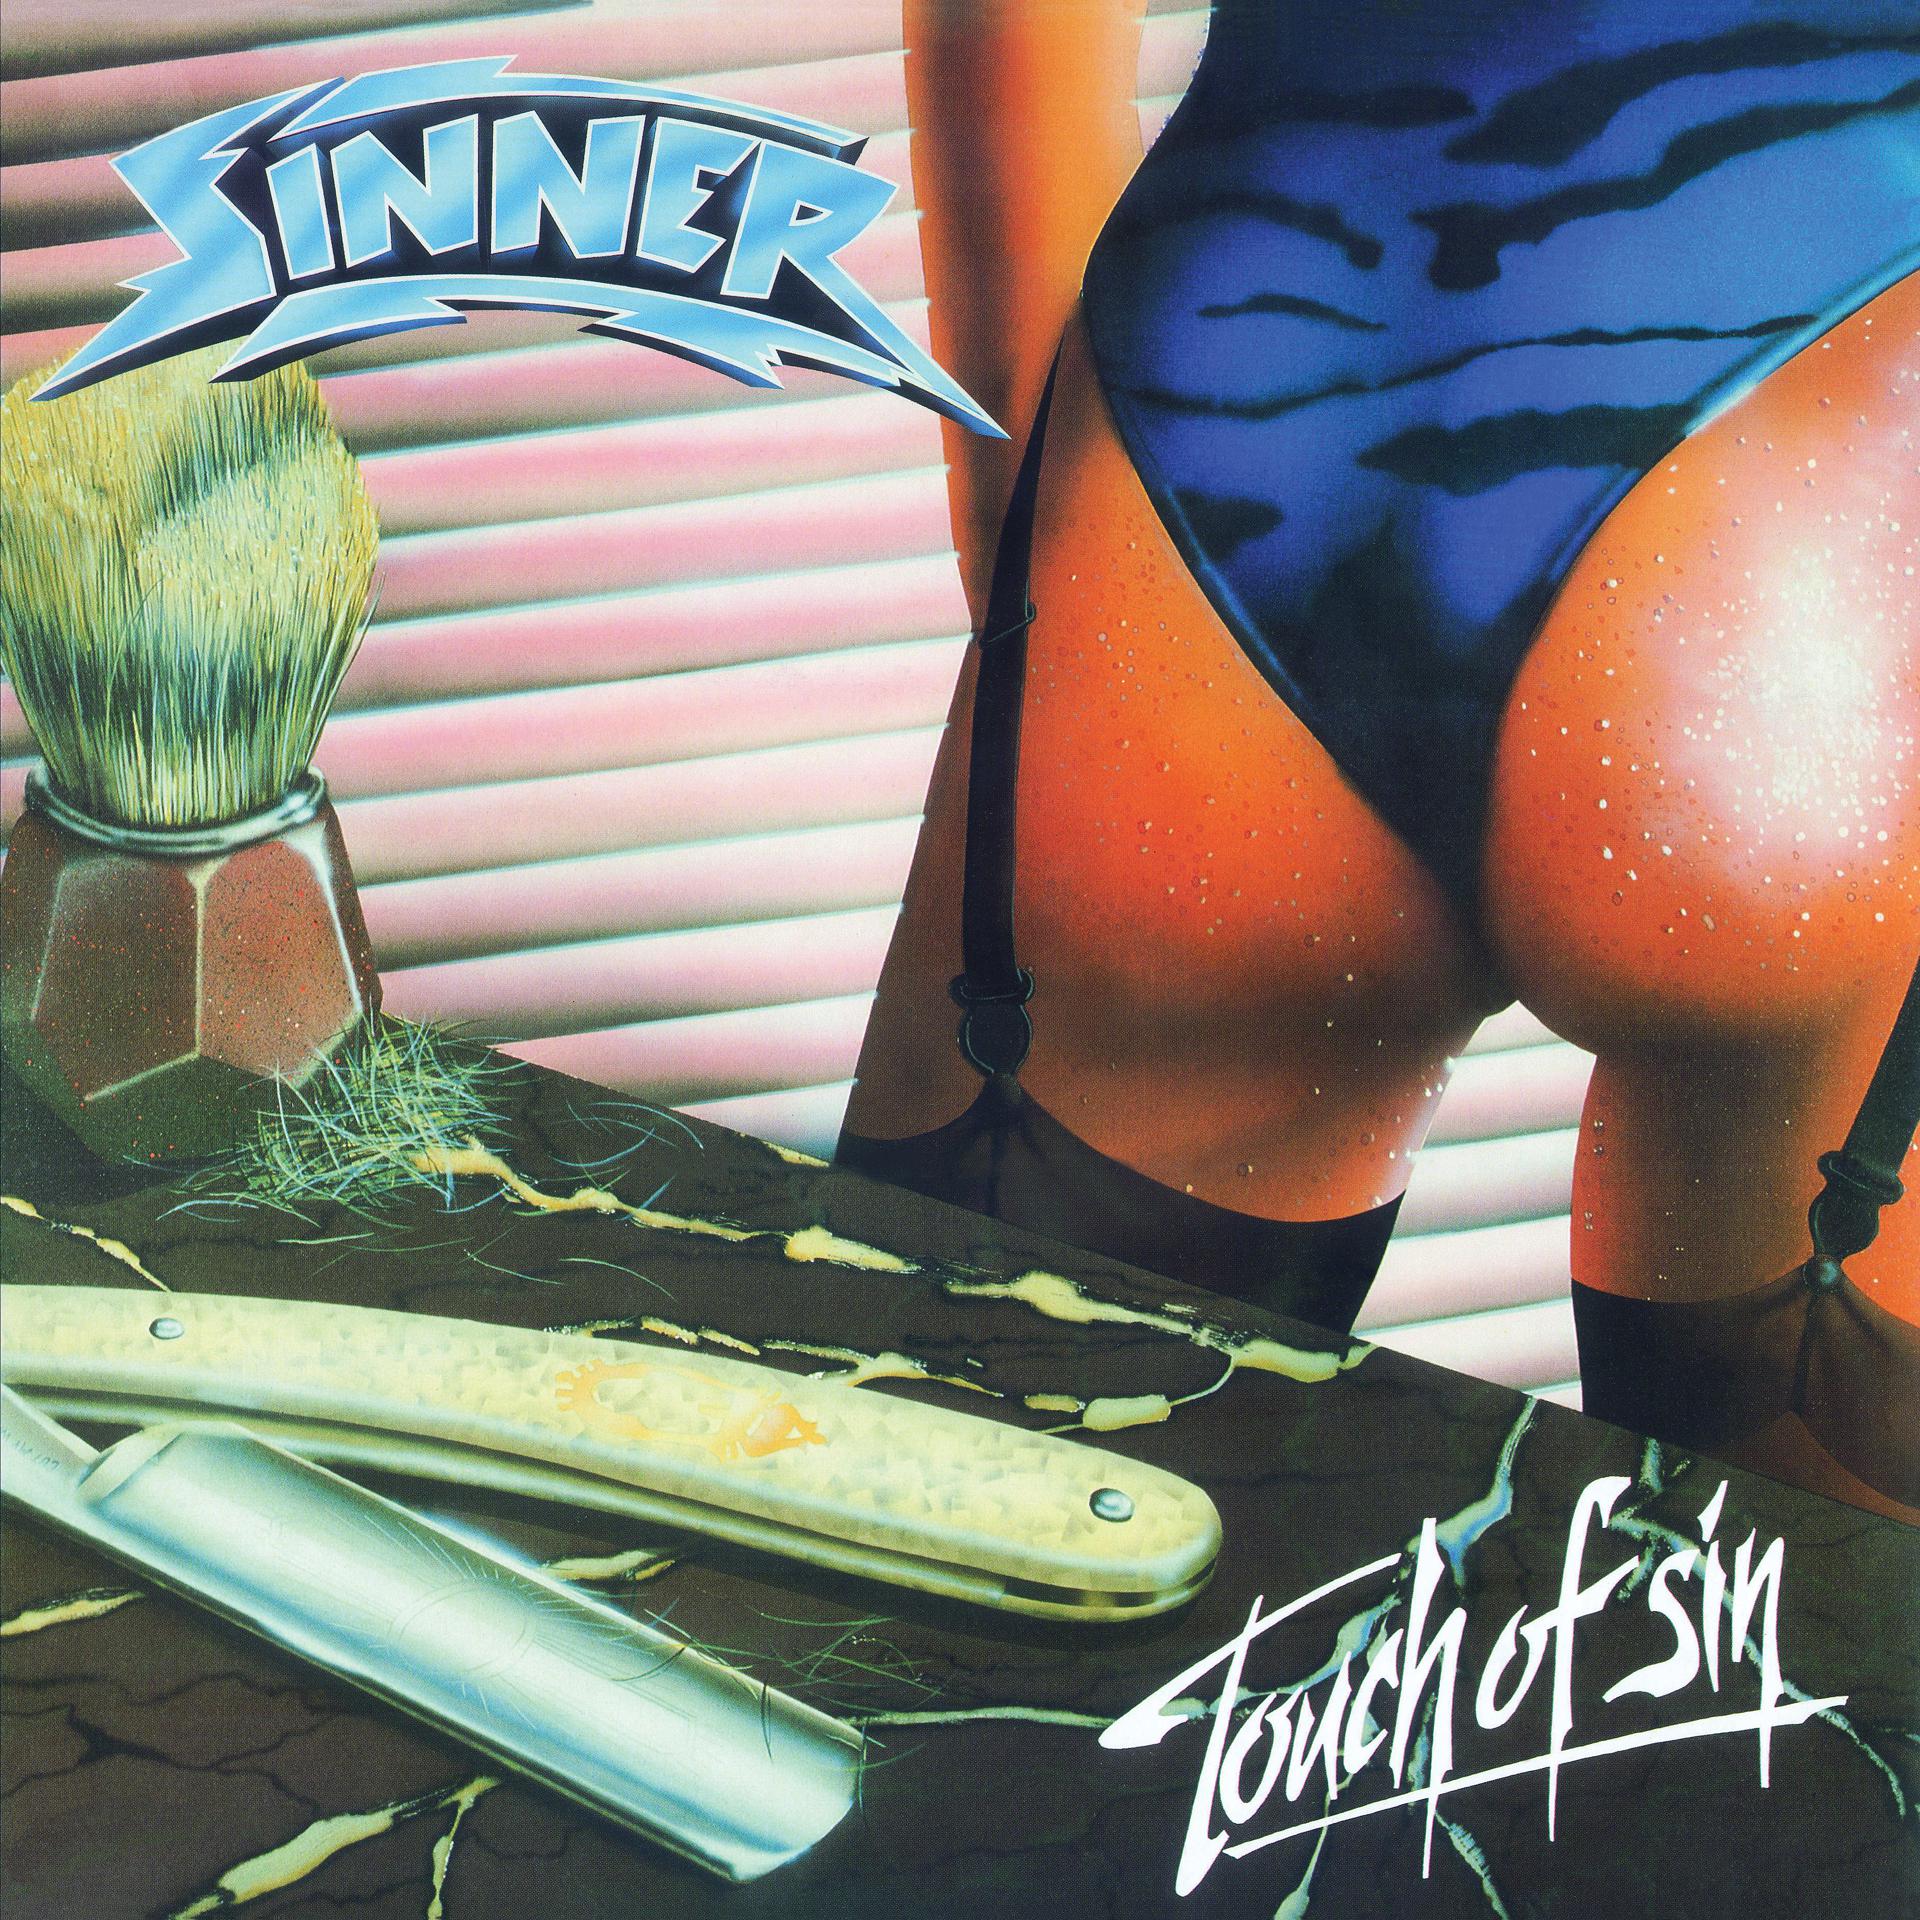 Постер к треку Sinner - Born to Rock